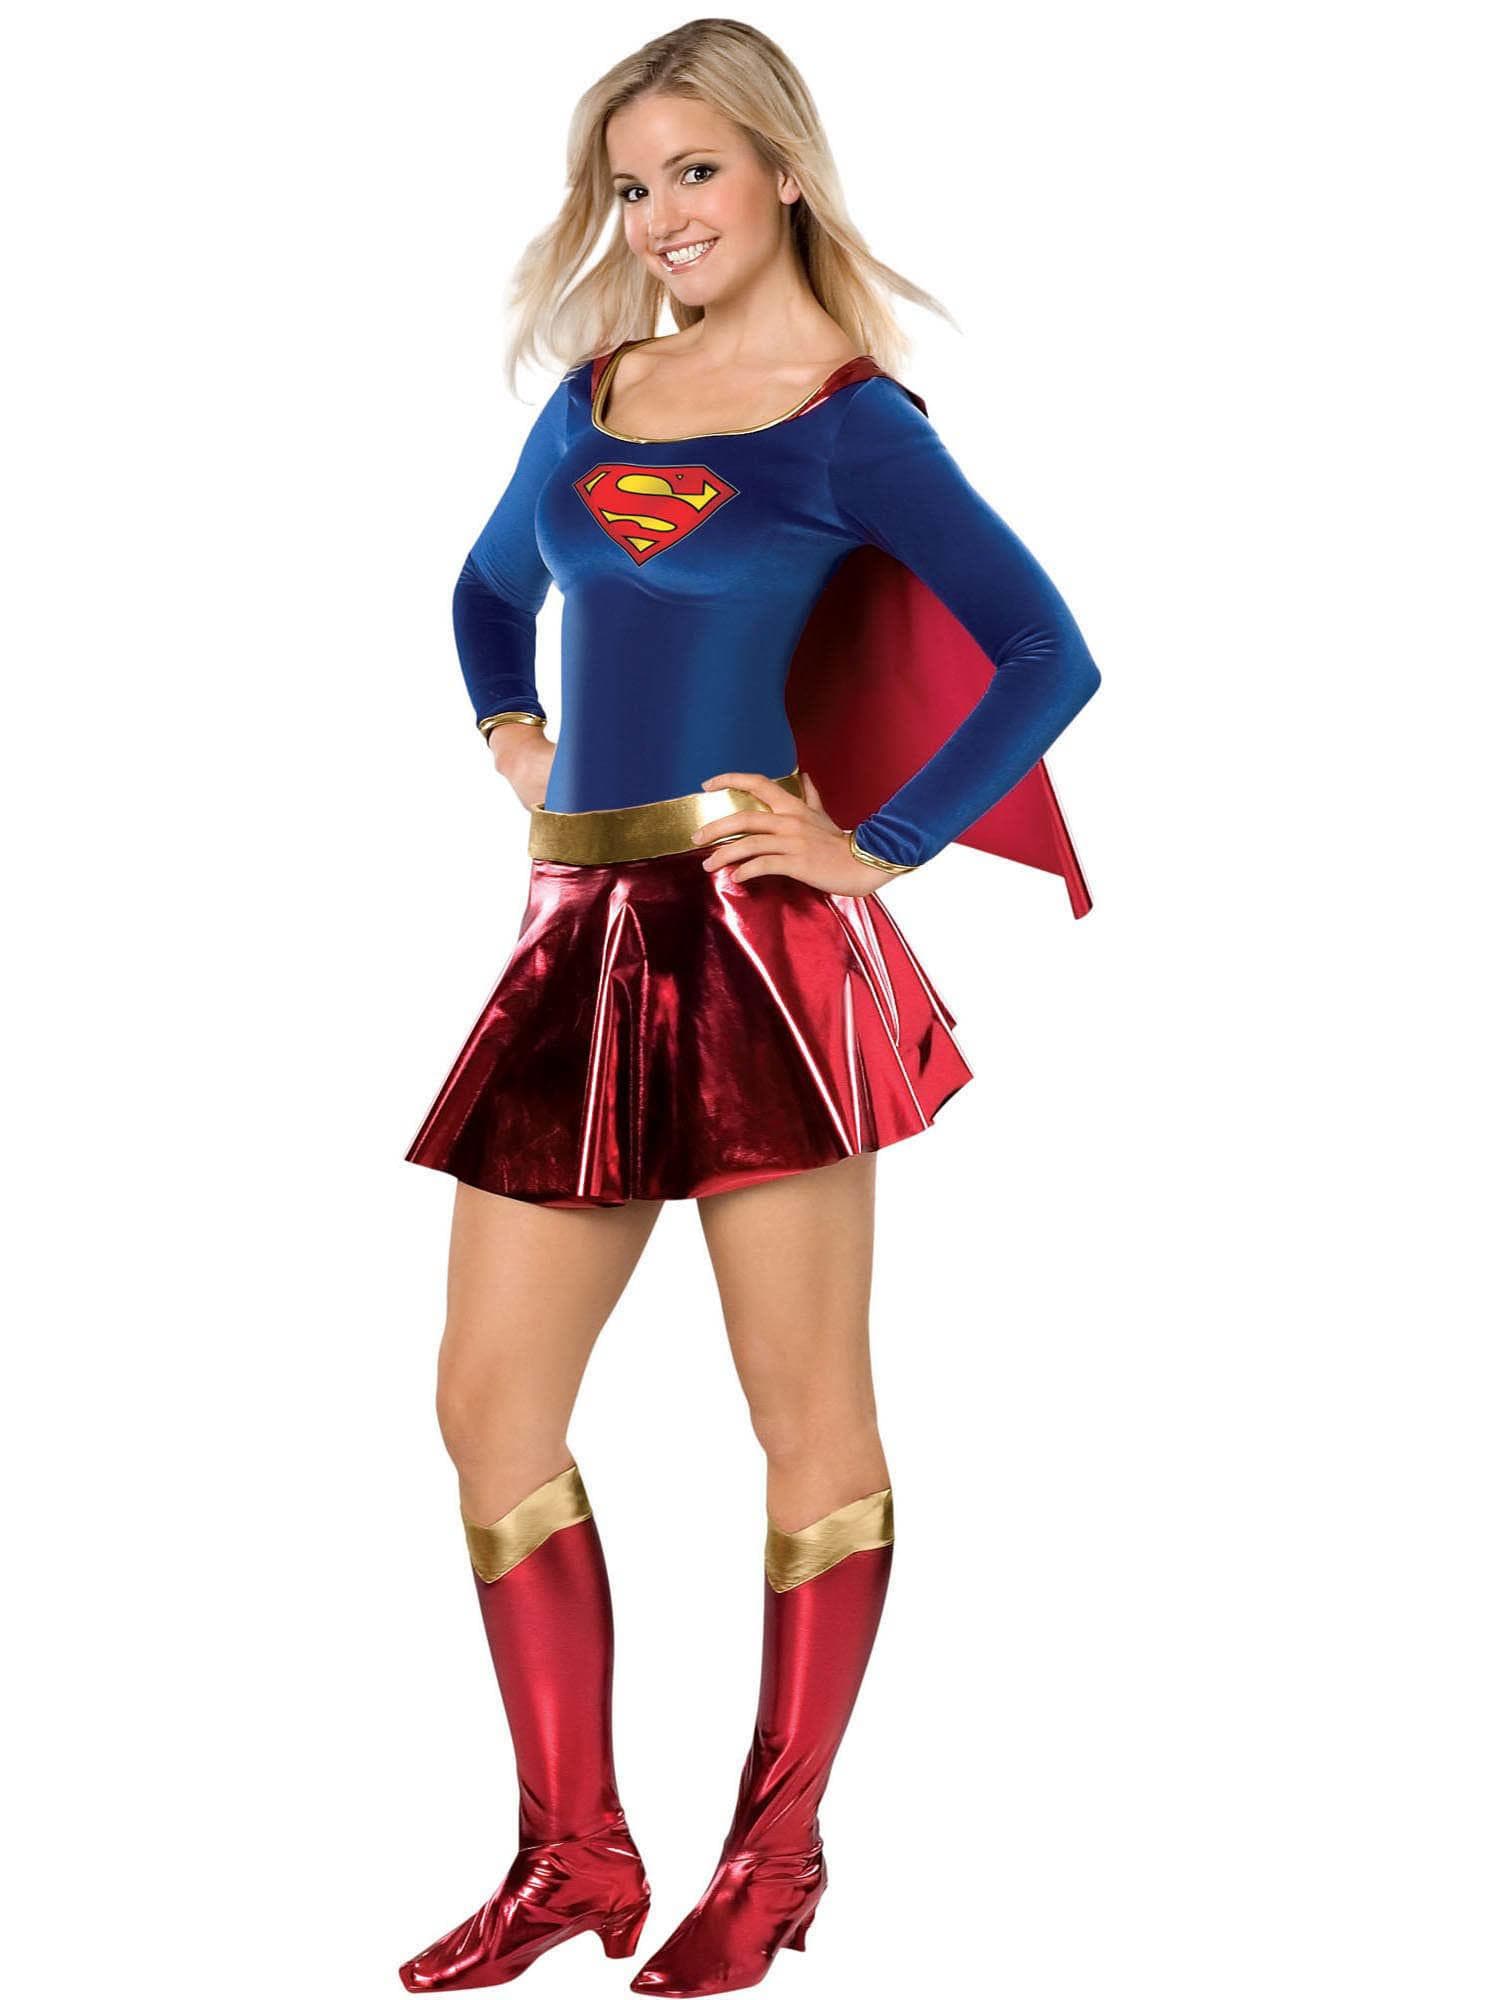 Adult DC Comics Supergirl Deluxe Costume - costumes.com